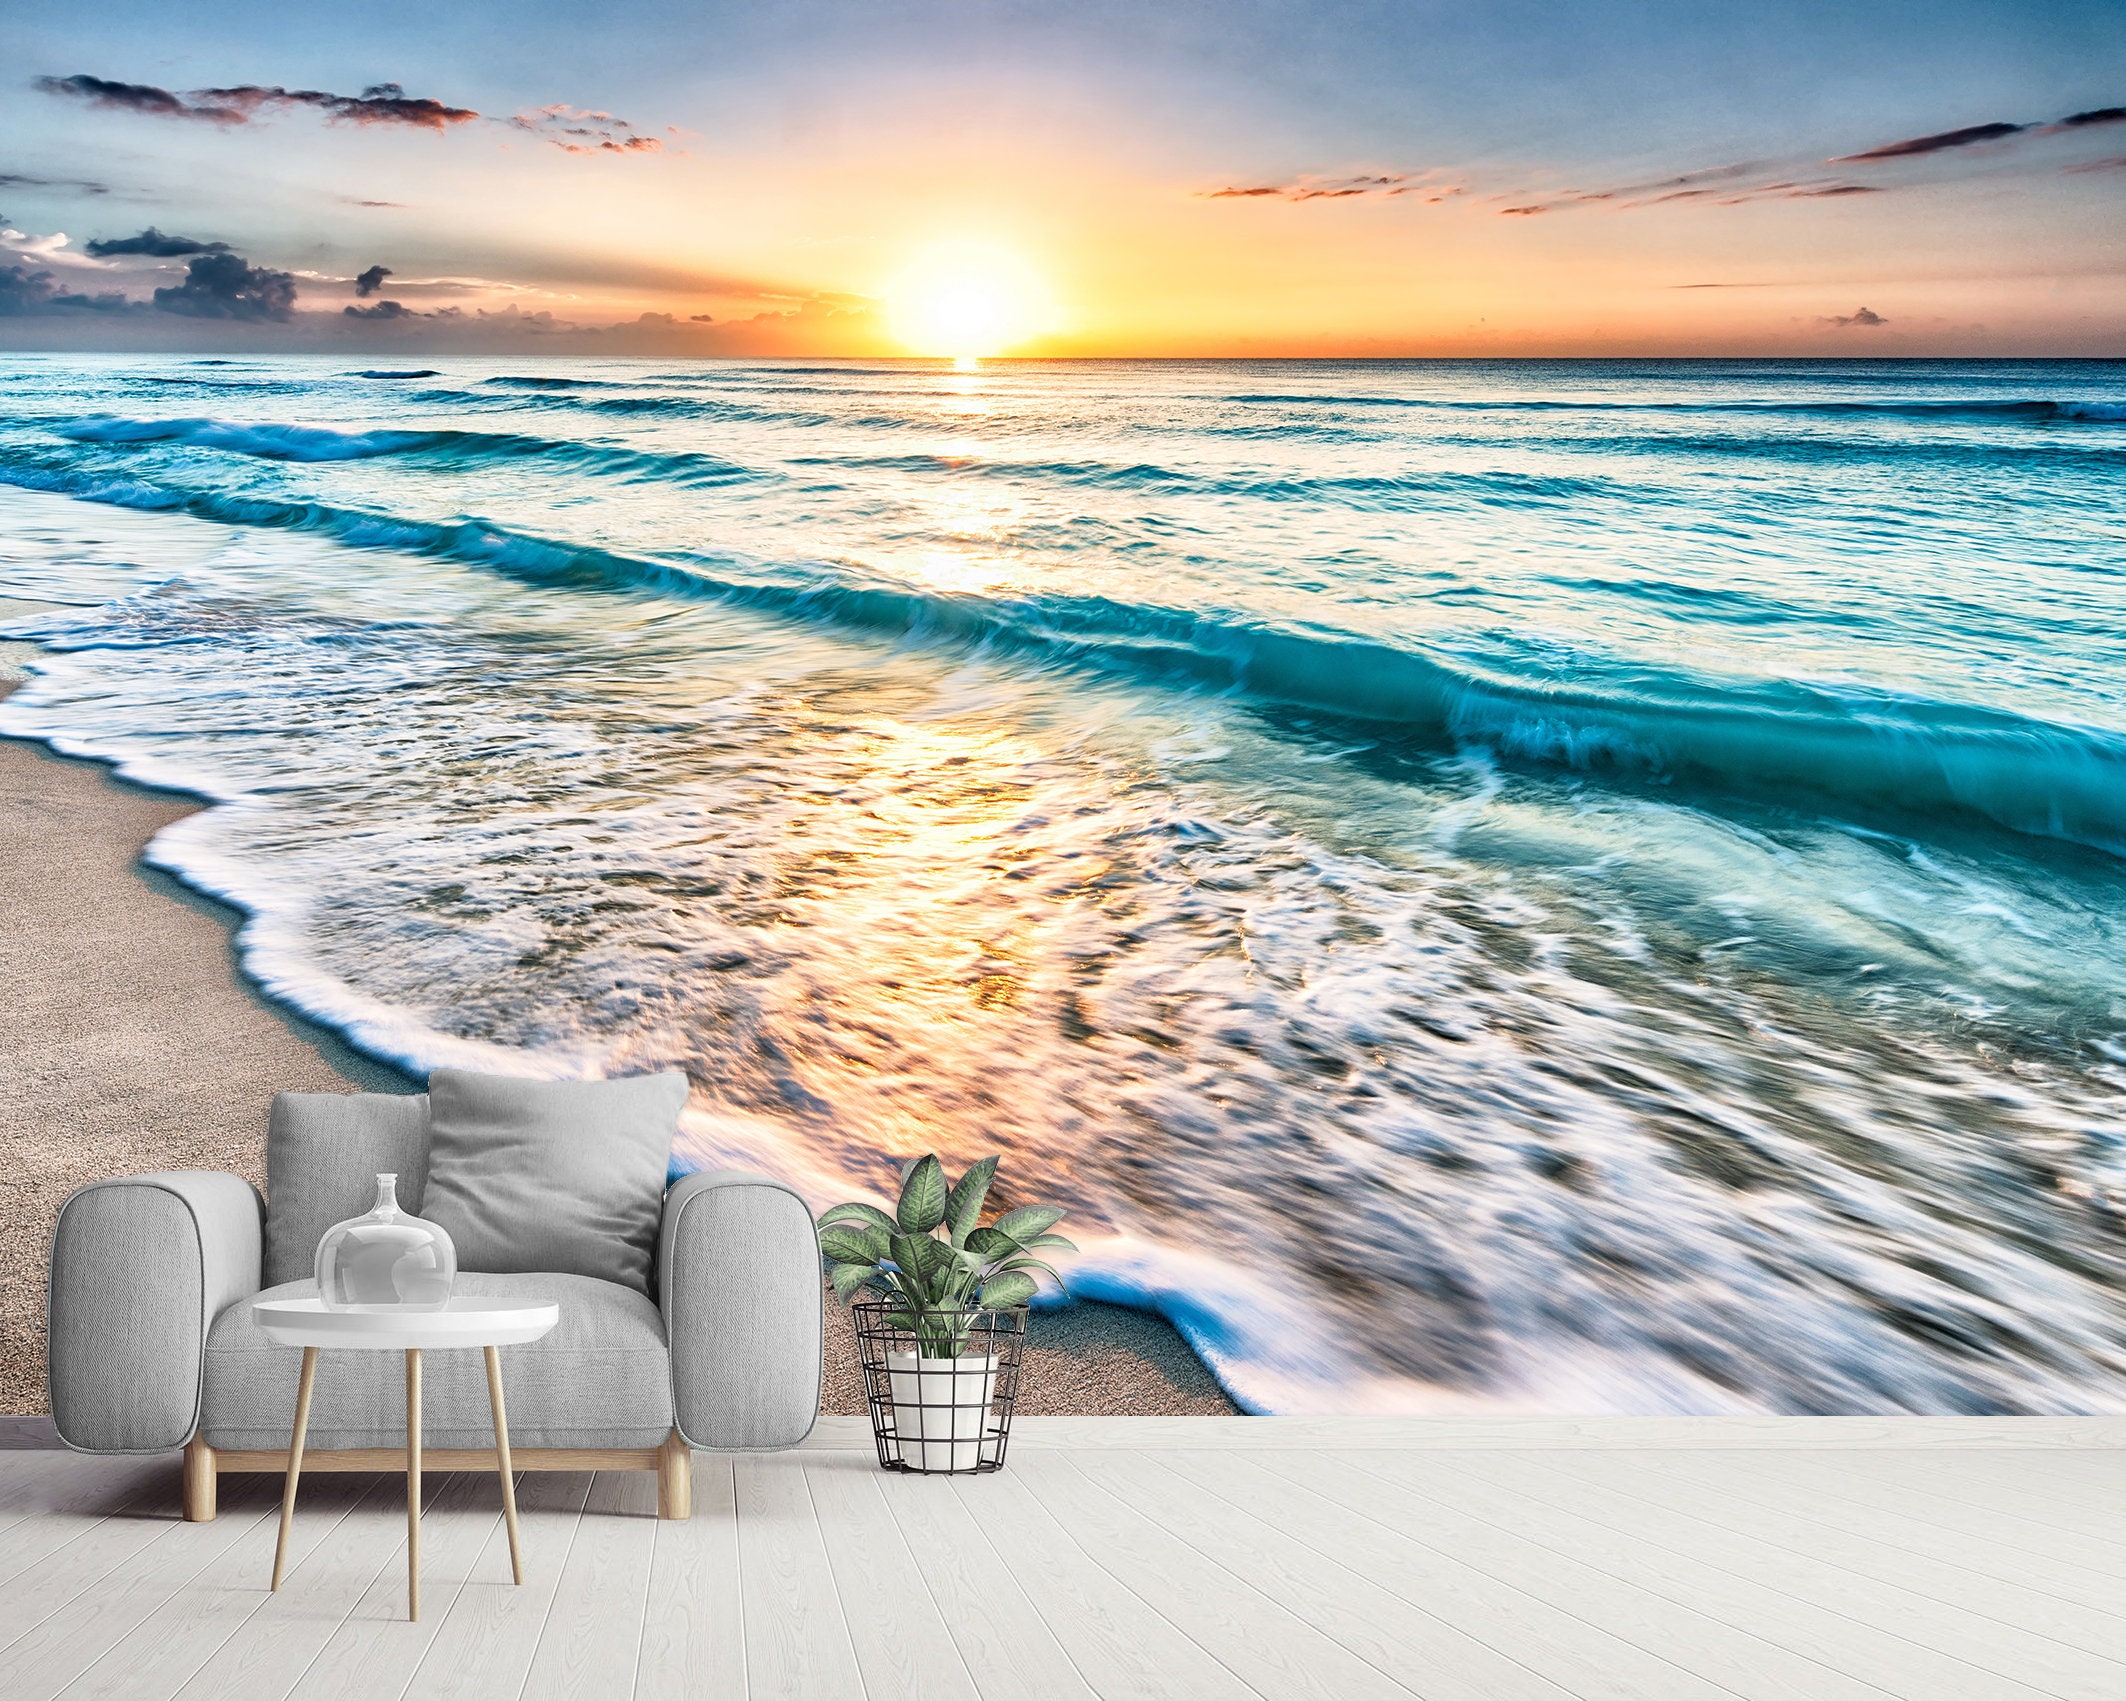 Dreamy Sea Beach Peel and Stick Wallpaper Mural Ocean Sunset